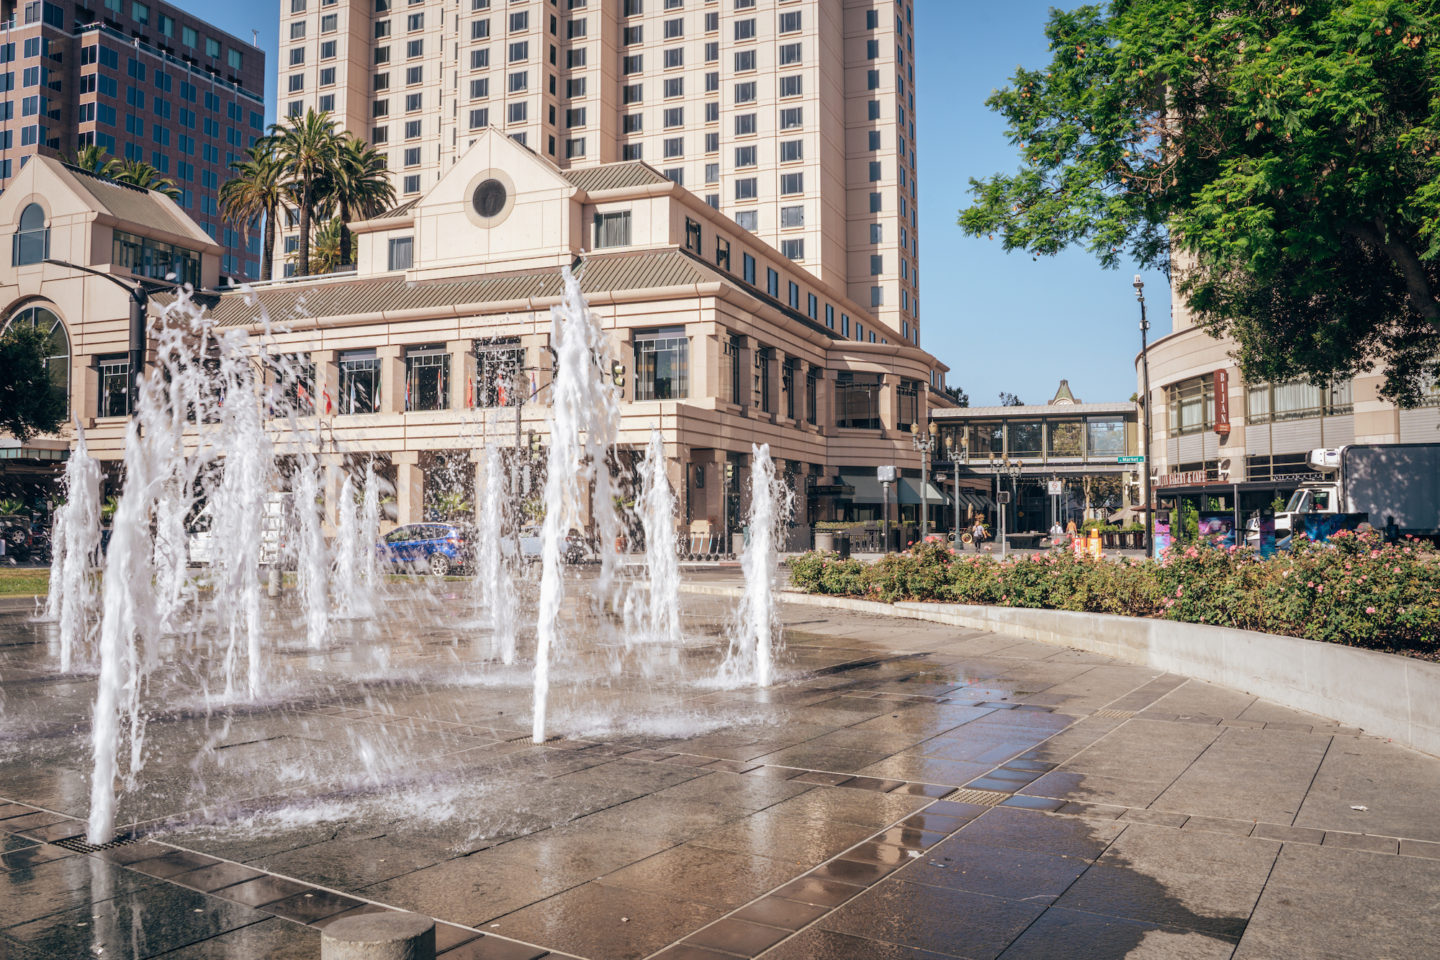 Fountains in Plaza de Caesar Chavez Park - San Jose, California